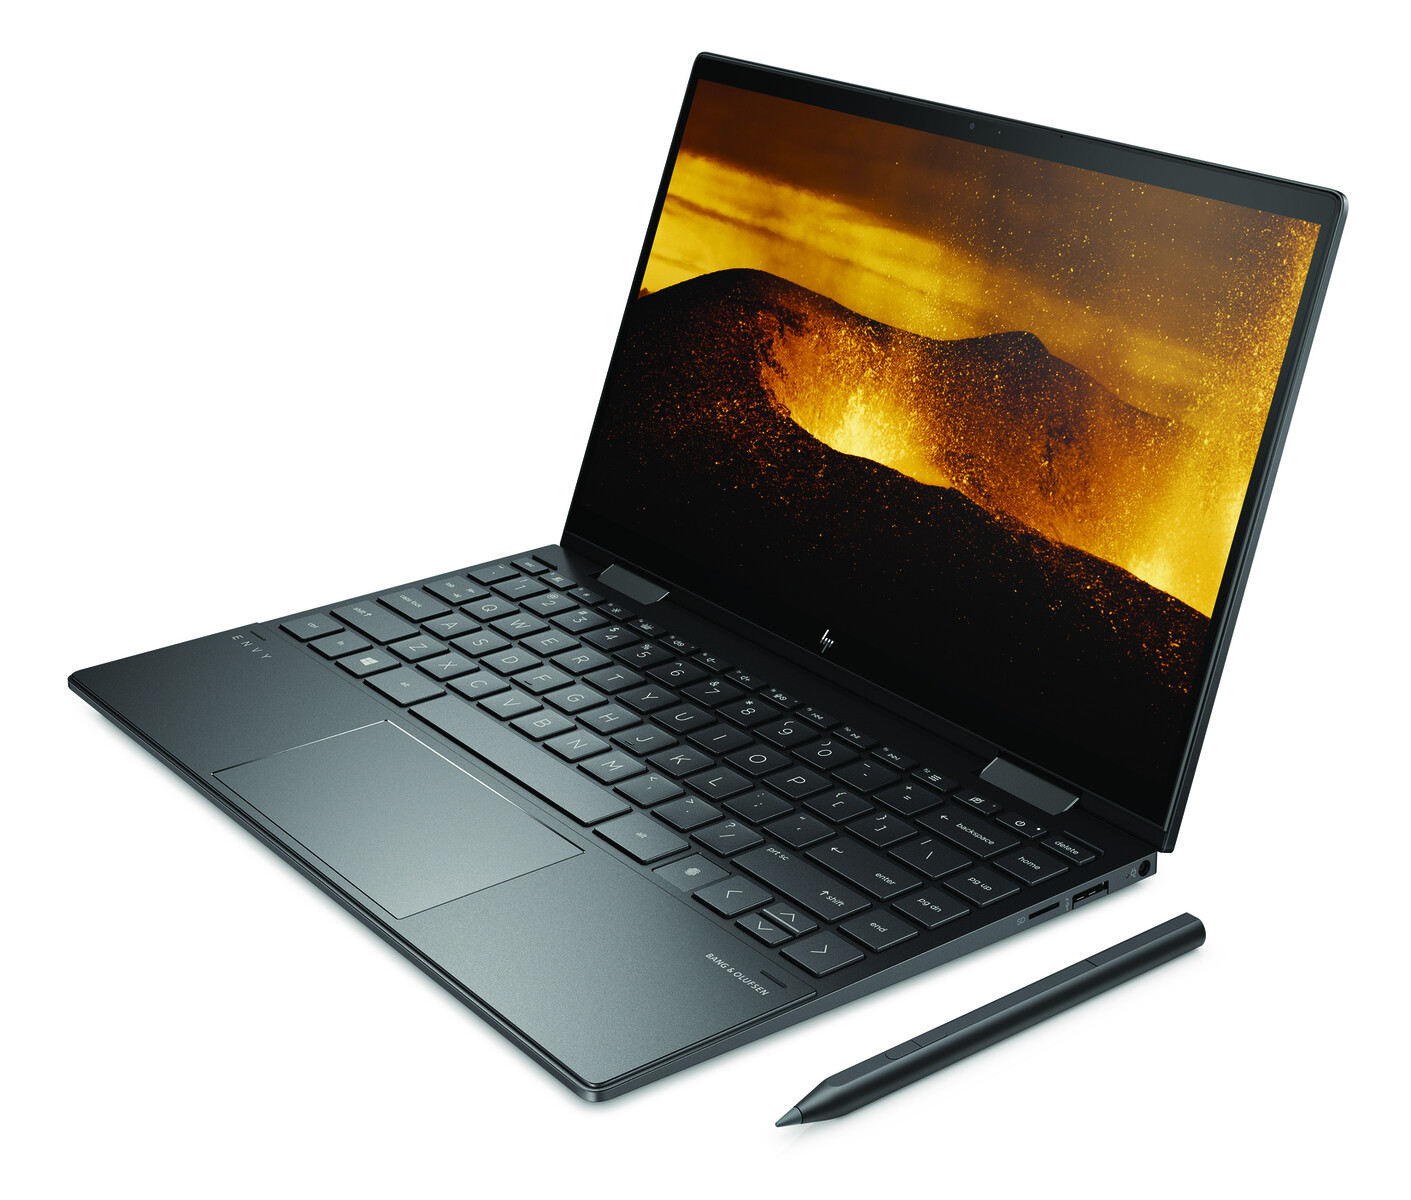 HP Envy x360 13-ay0010nr - Notebookcheck.net External Reviews